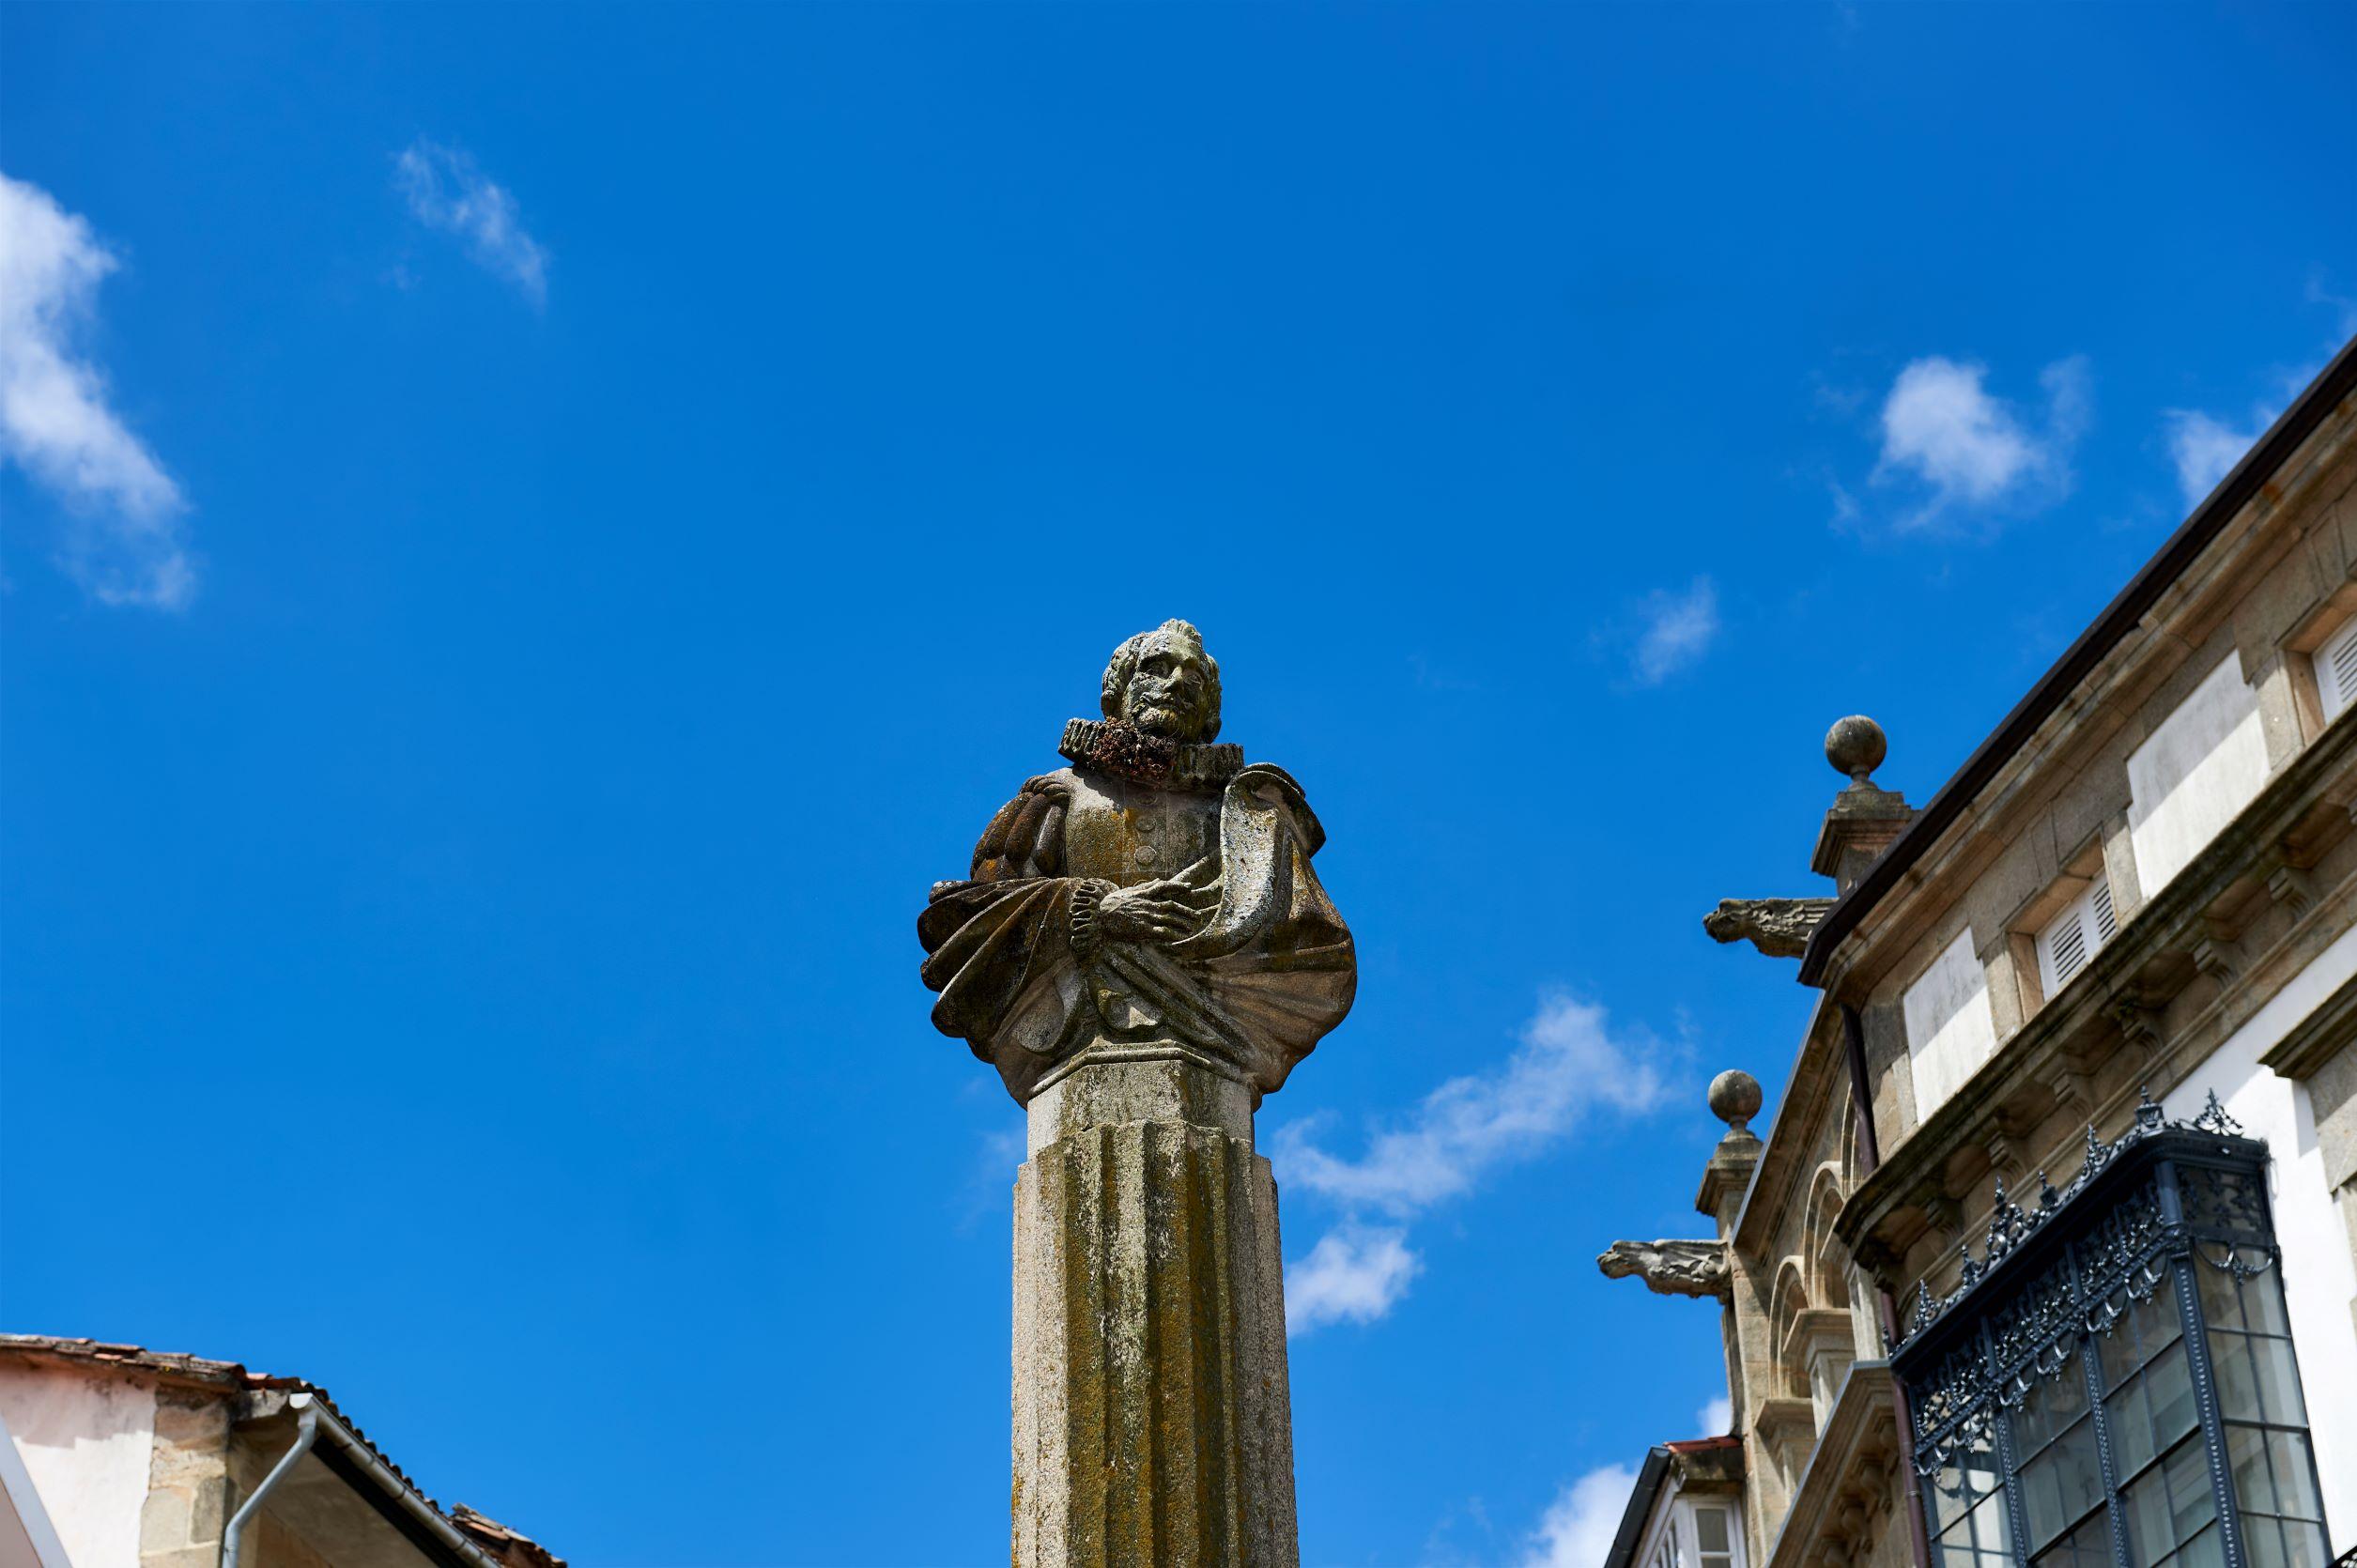 Busto de Cervantes presidiendo la plaza(Fuente: Shutterstock)